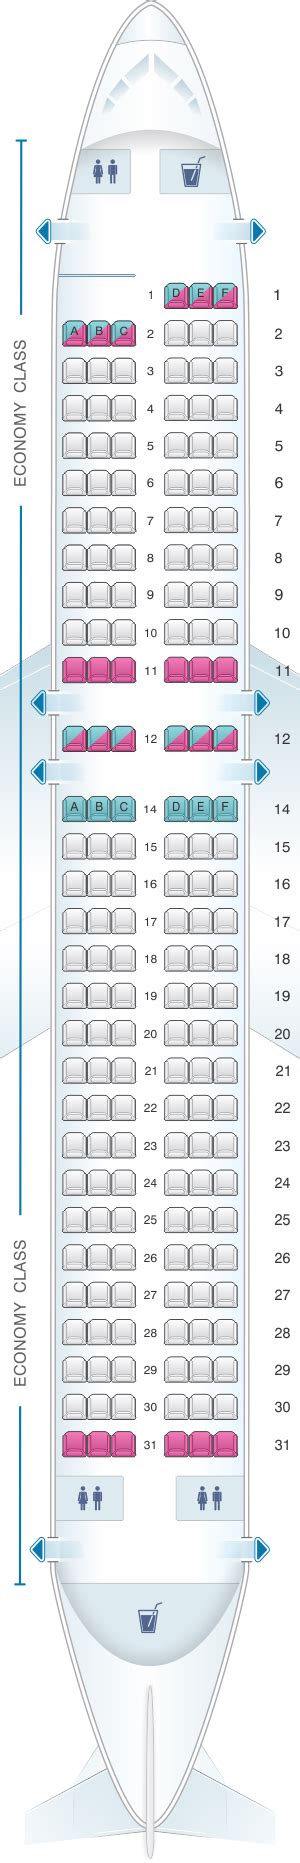 Allegiant Air Airbus A320 Seat Map; Seat 20a; Allegi